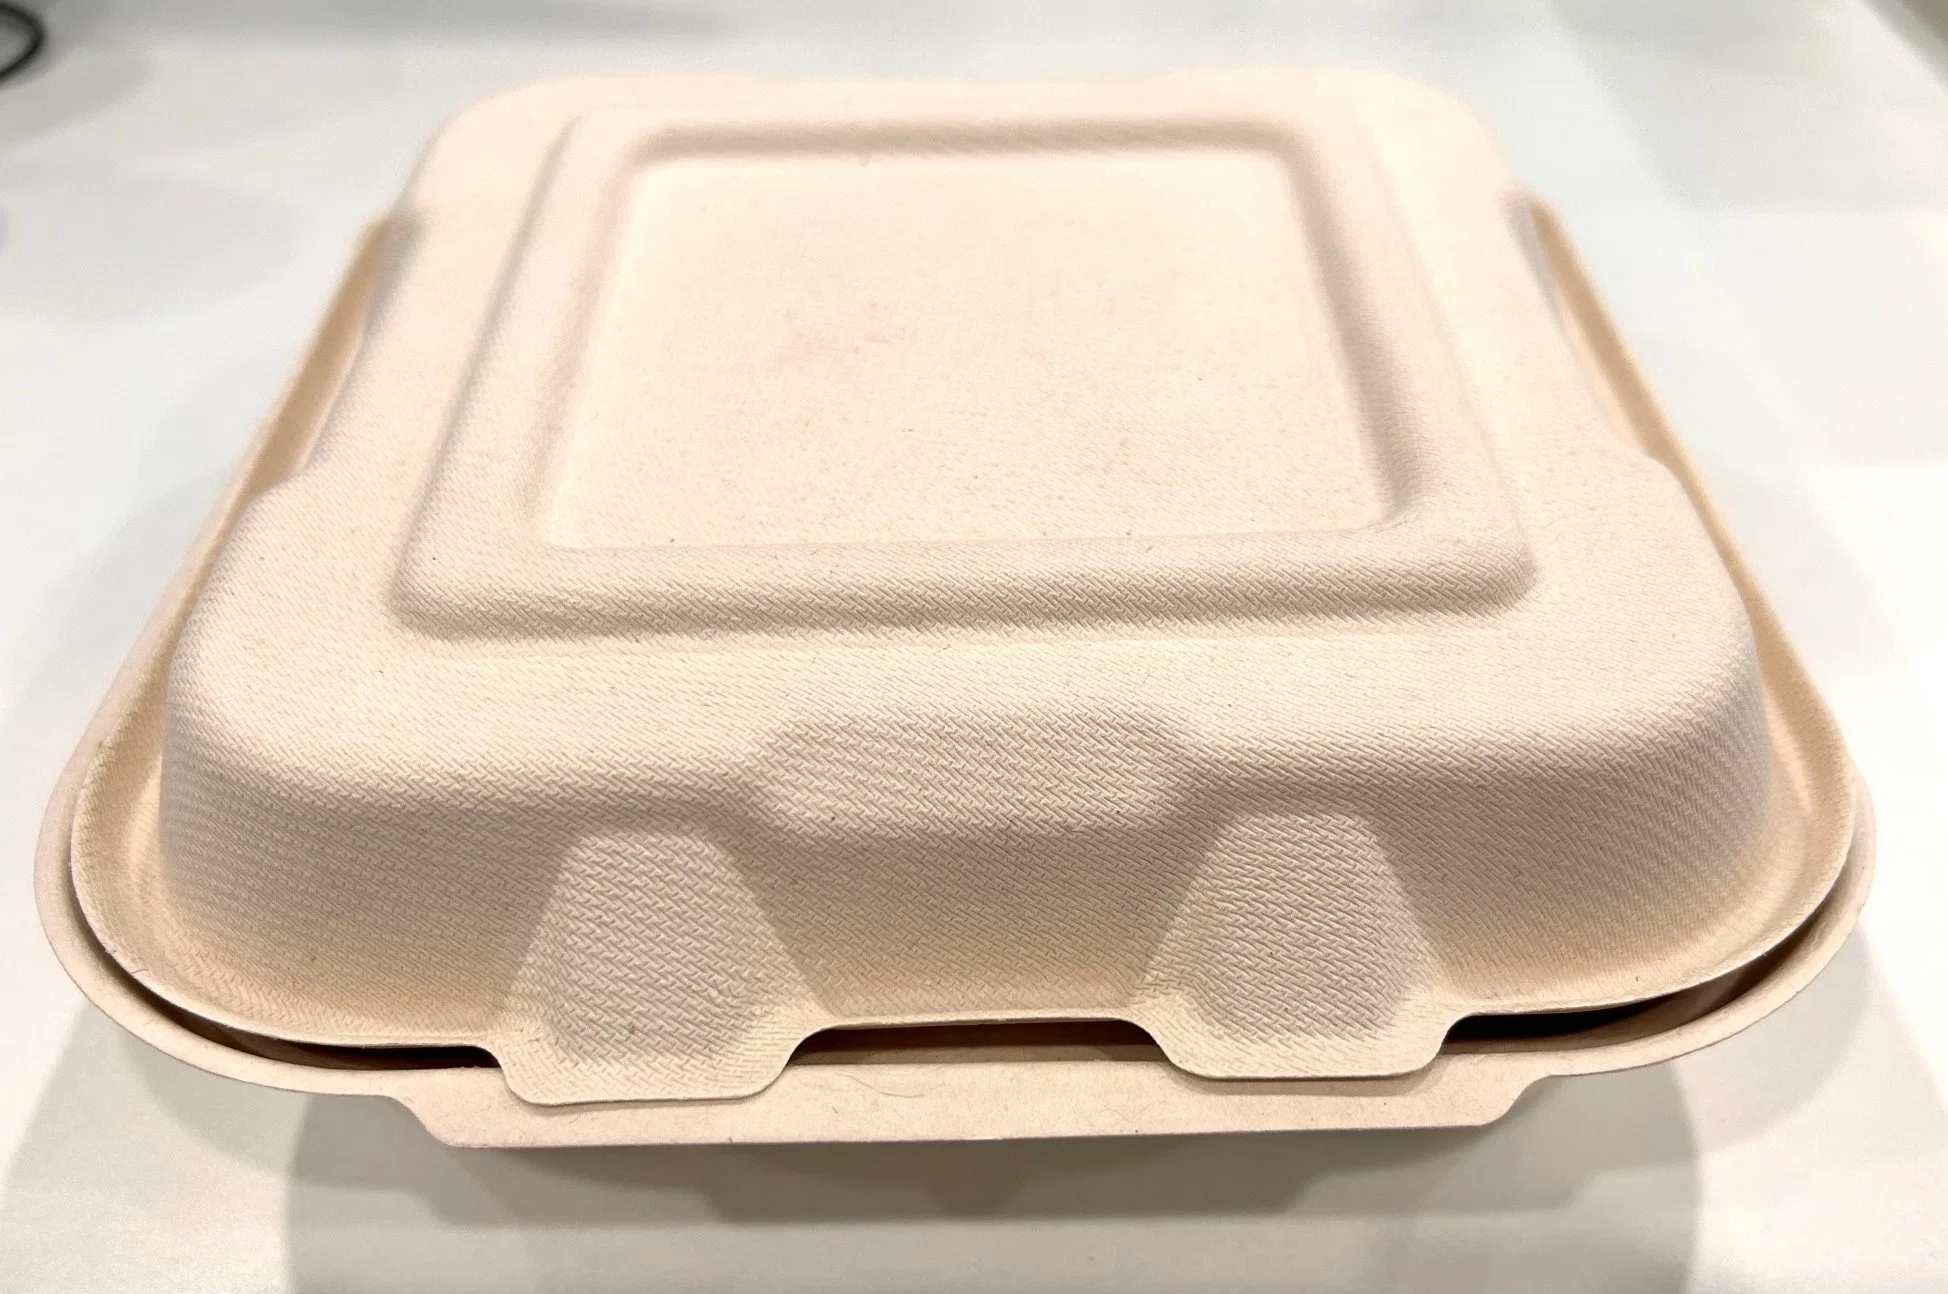 Caja de papel / envase de embalaje de alimentos / Caja protectora / Caja de almuerzo